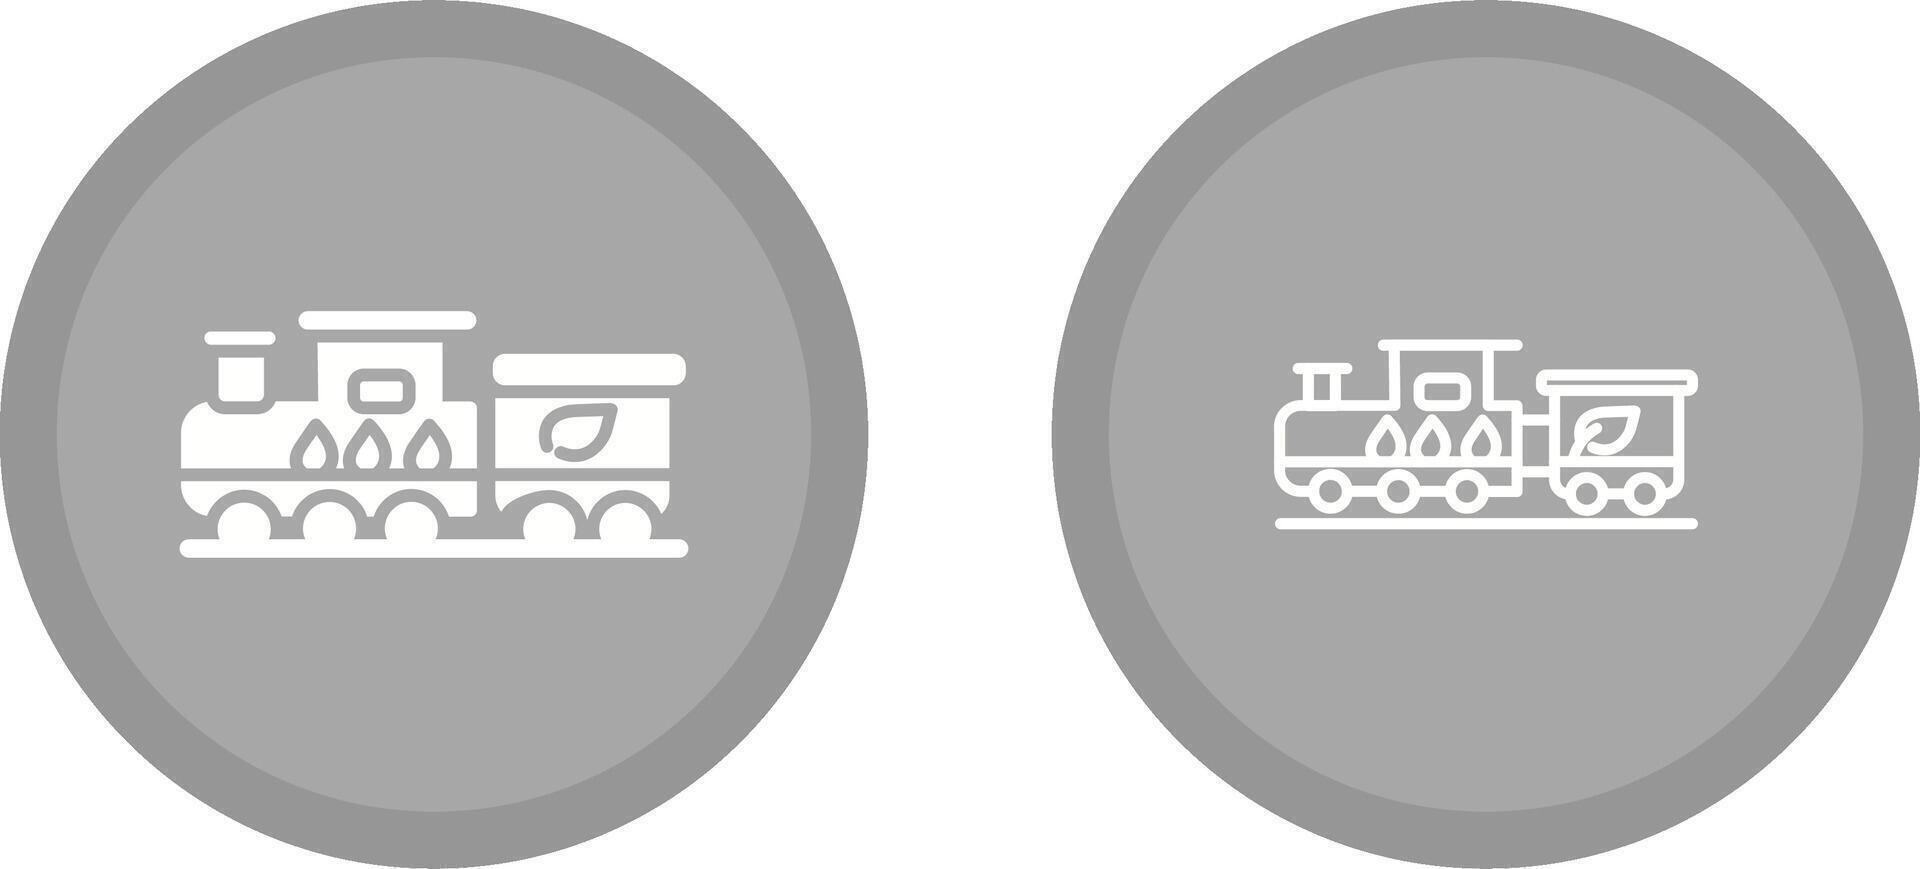 Ecology Train Vector Icon